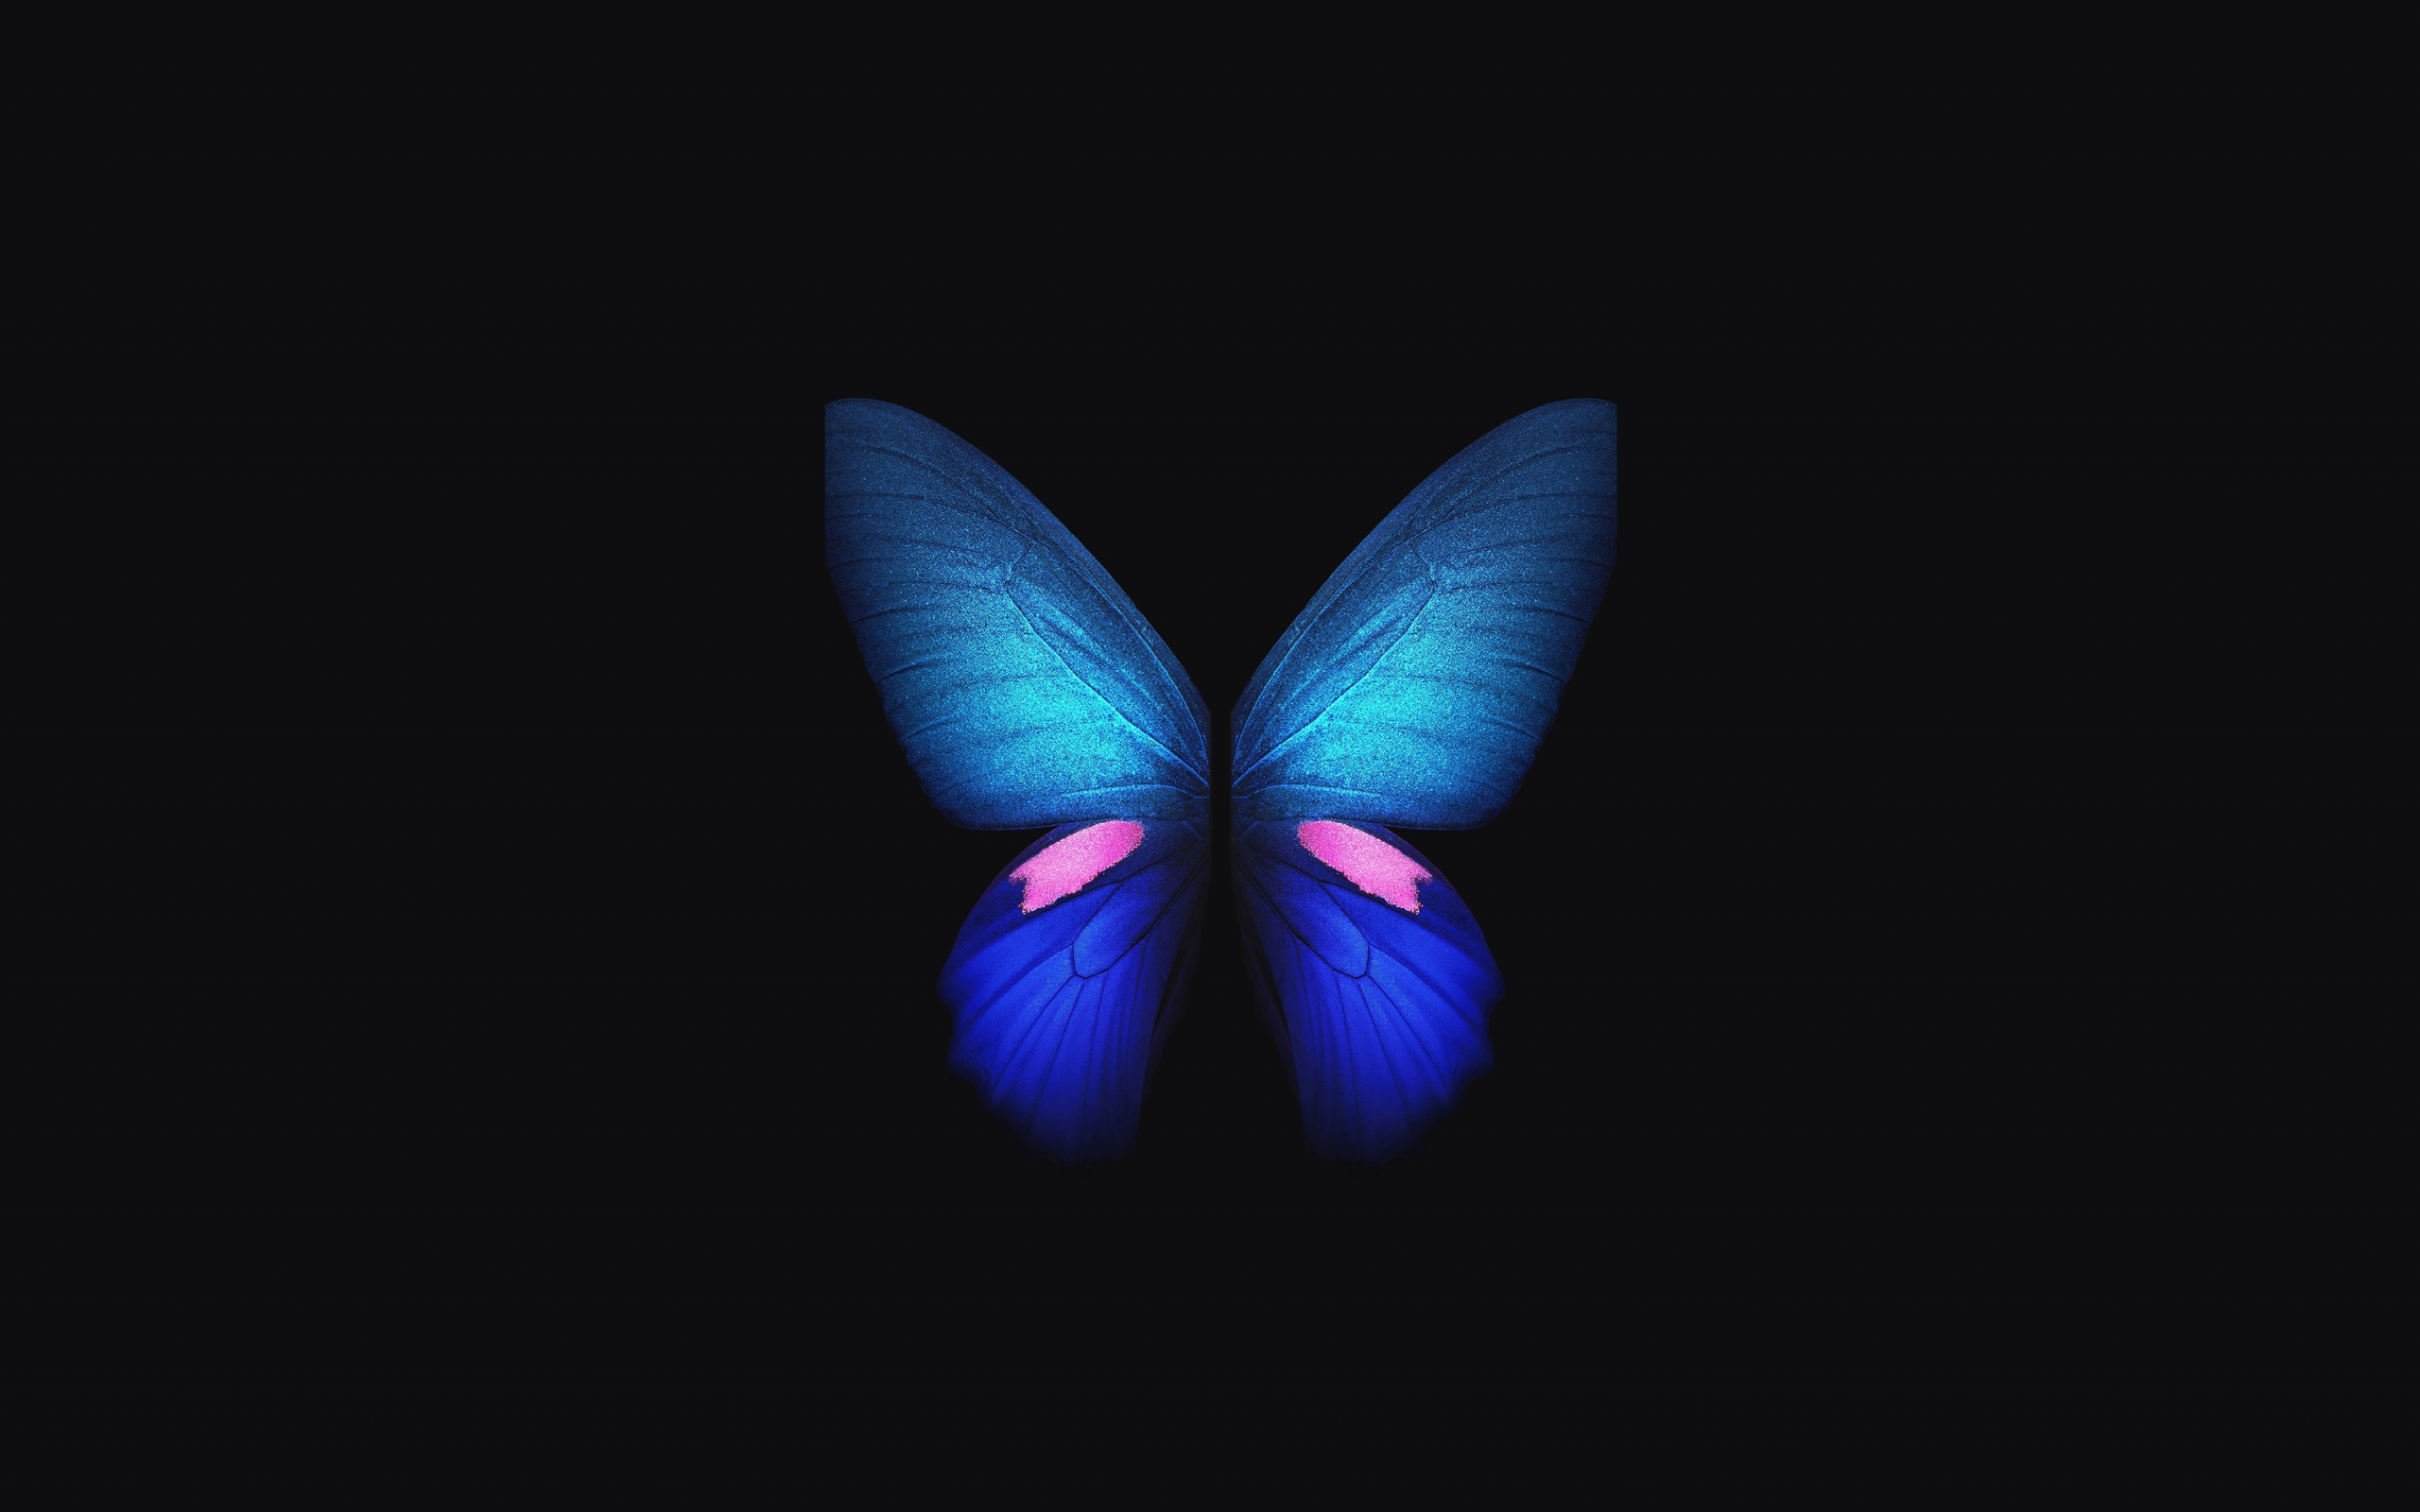 Download wallpaper 2560x1600 samsung galaxy fold, blue butterfly ...